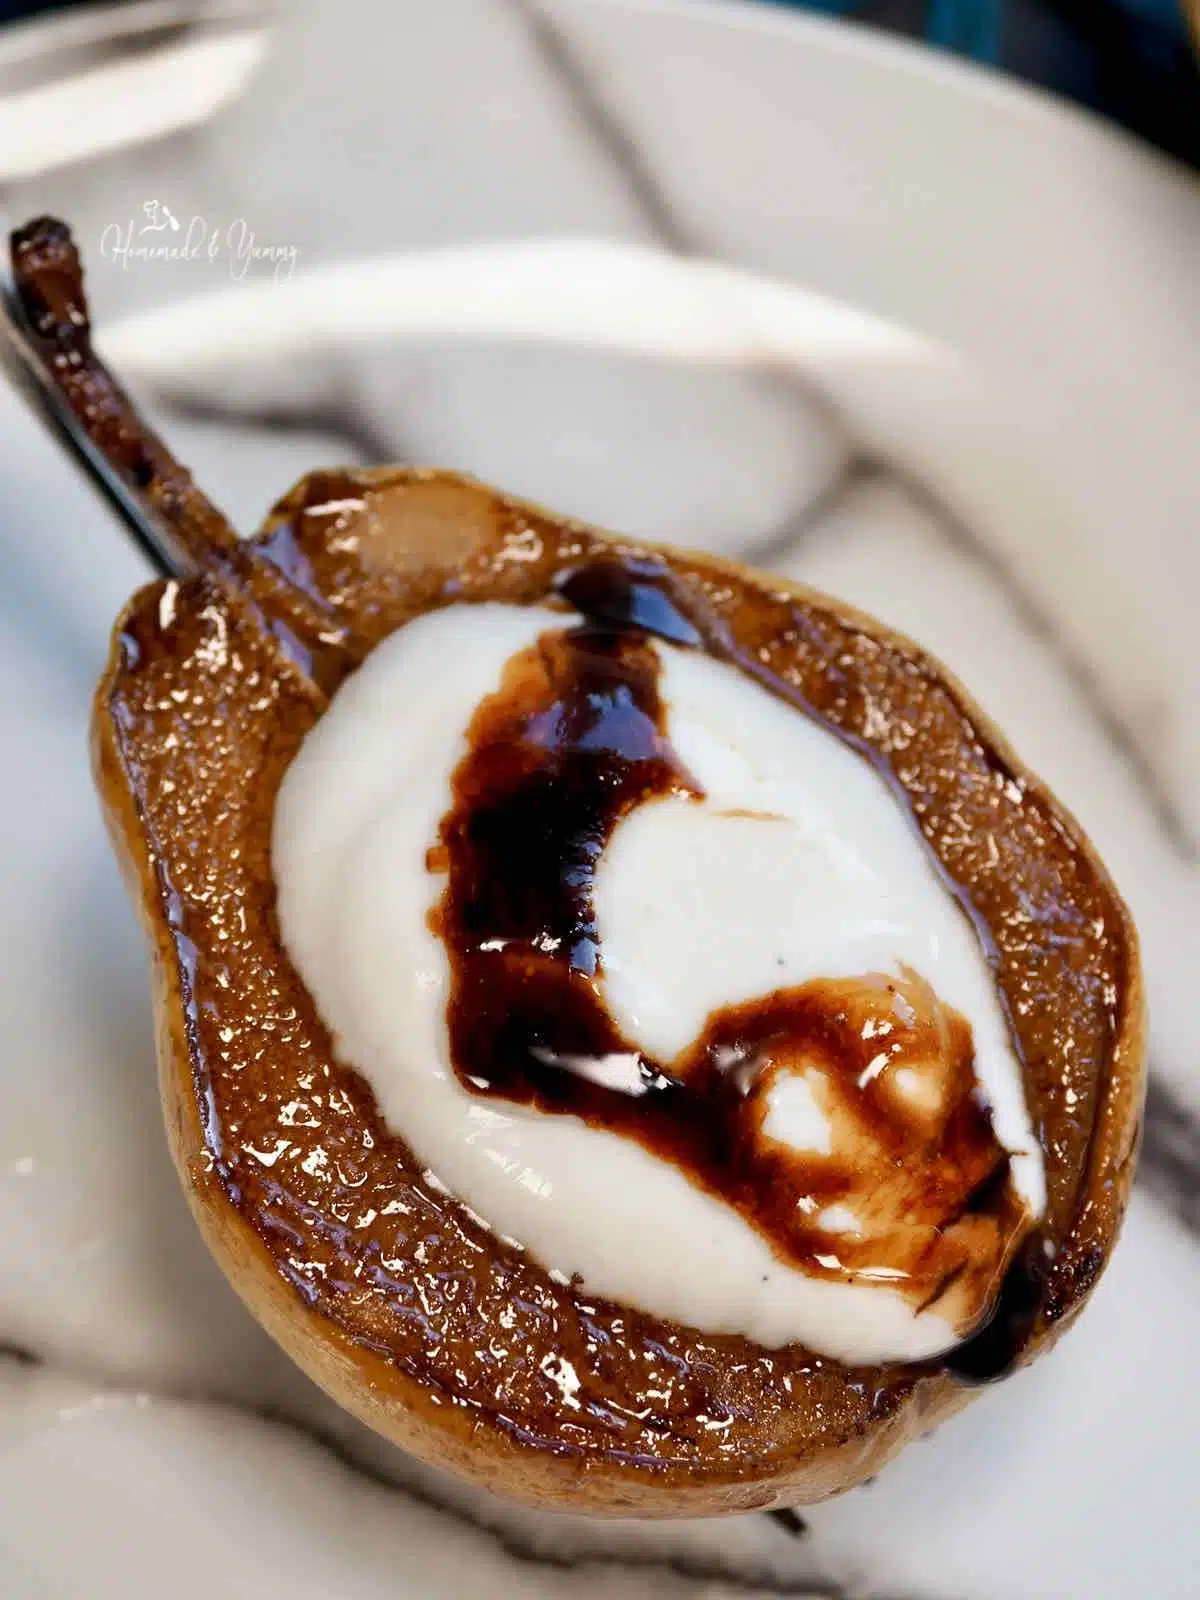 Yogurt and chocolate honey on a glazed pear.